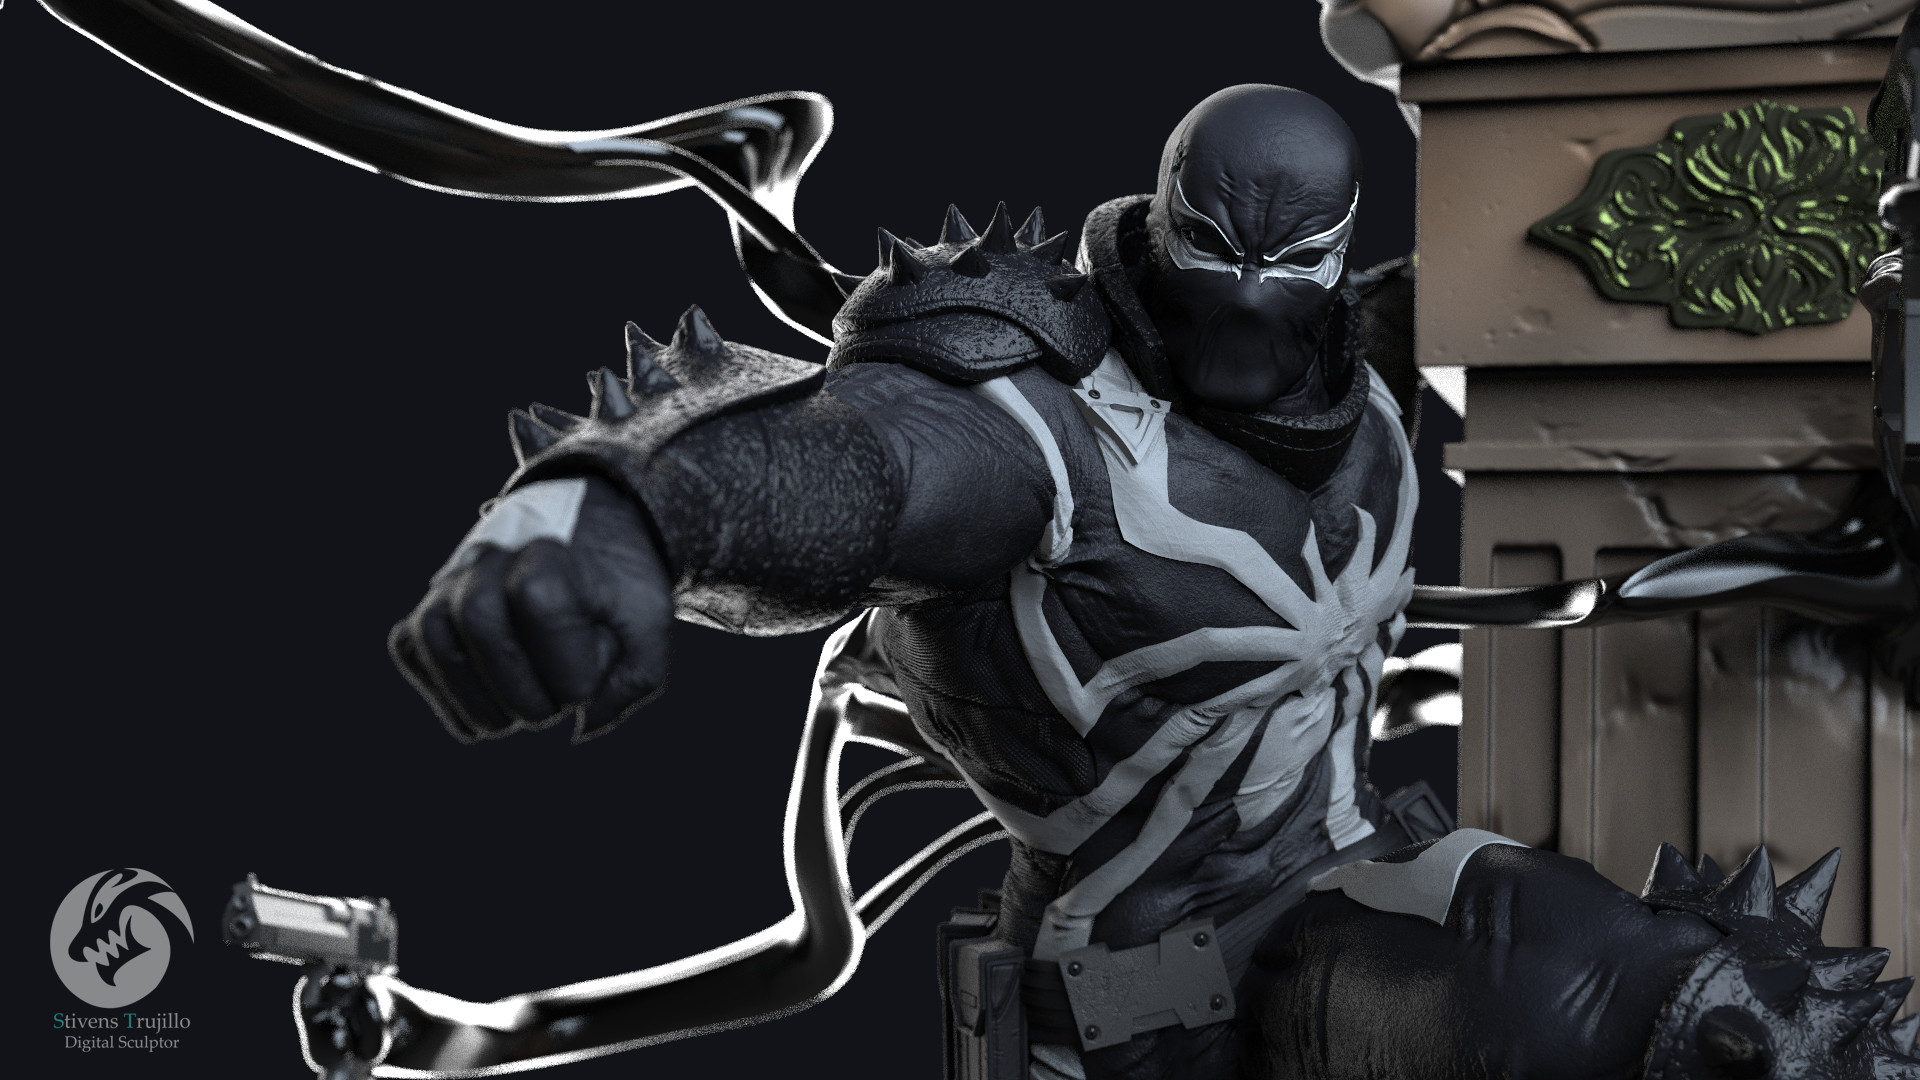 Agent Venom Wallpapers